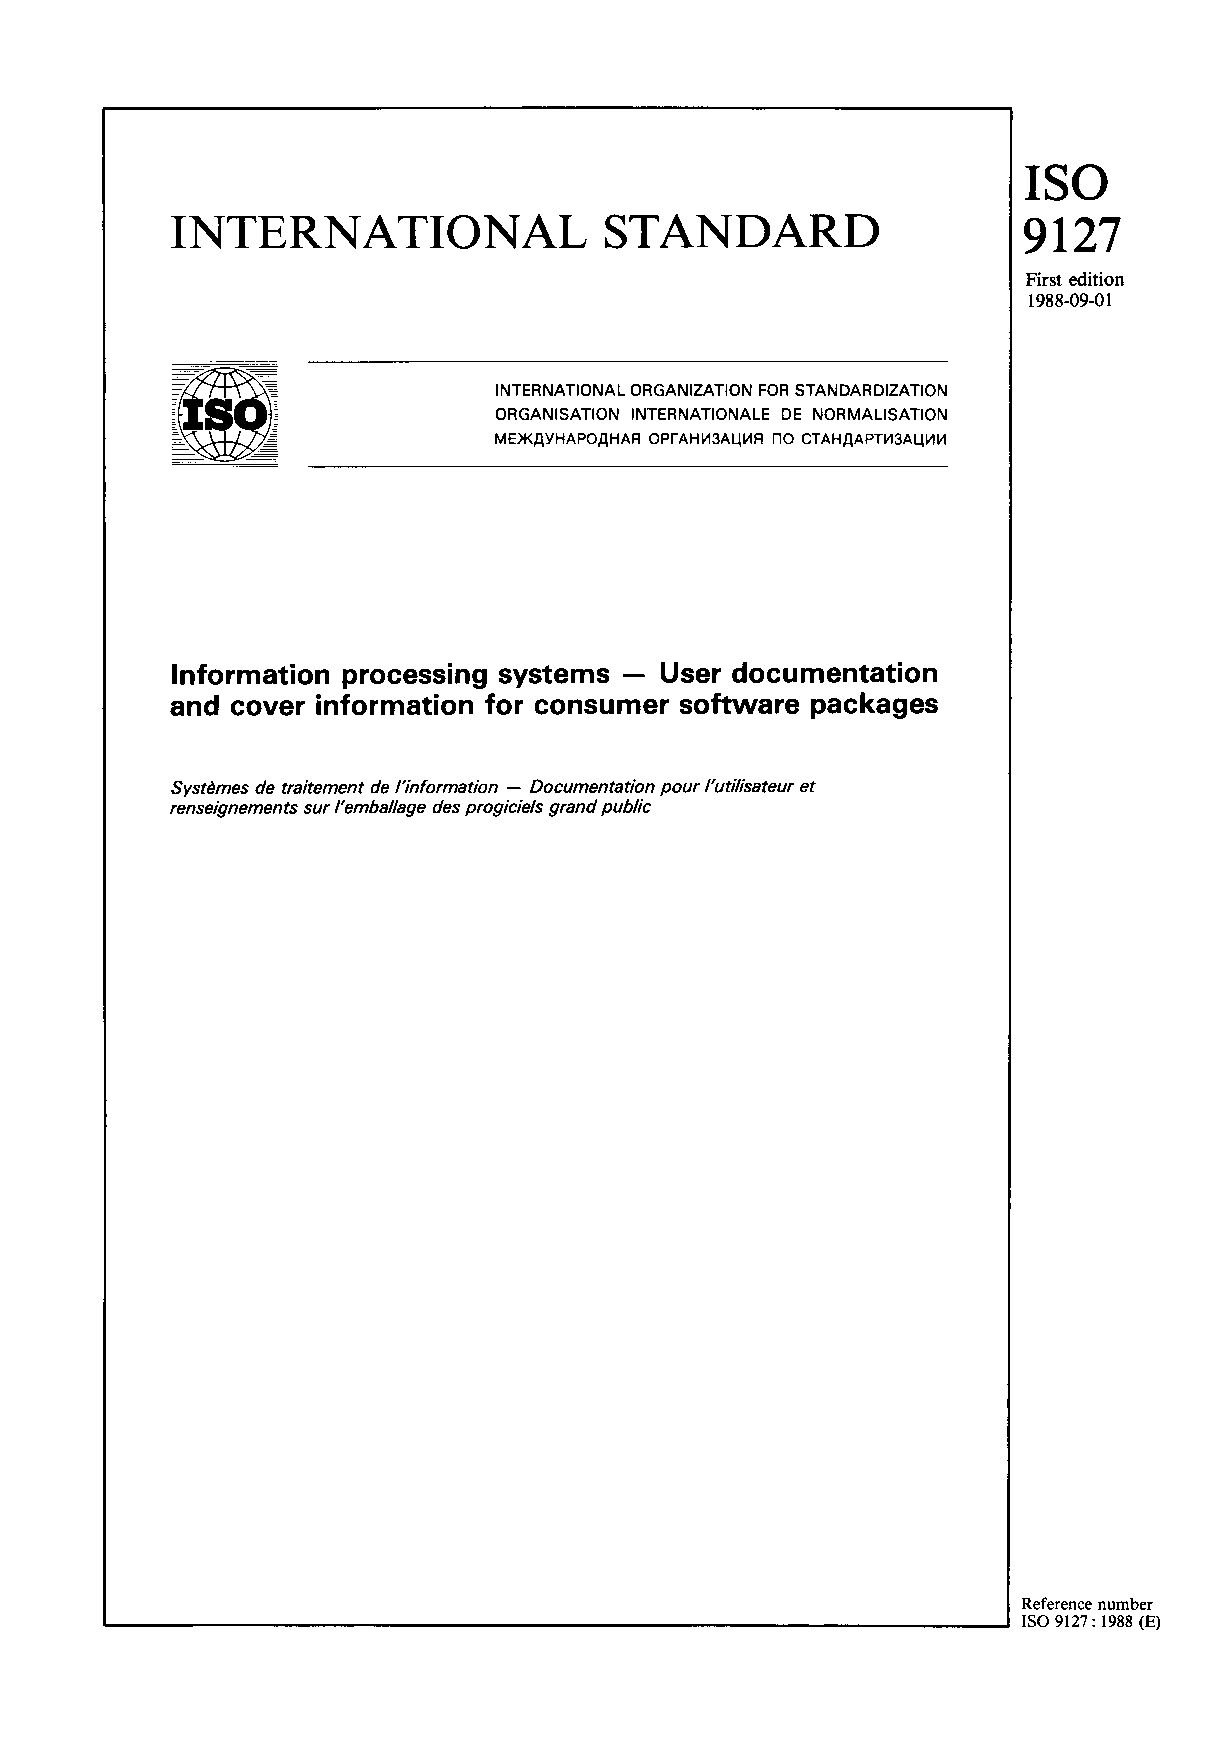 ISO 9127:1988封面图